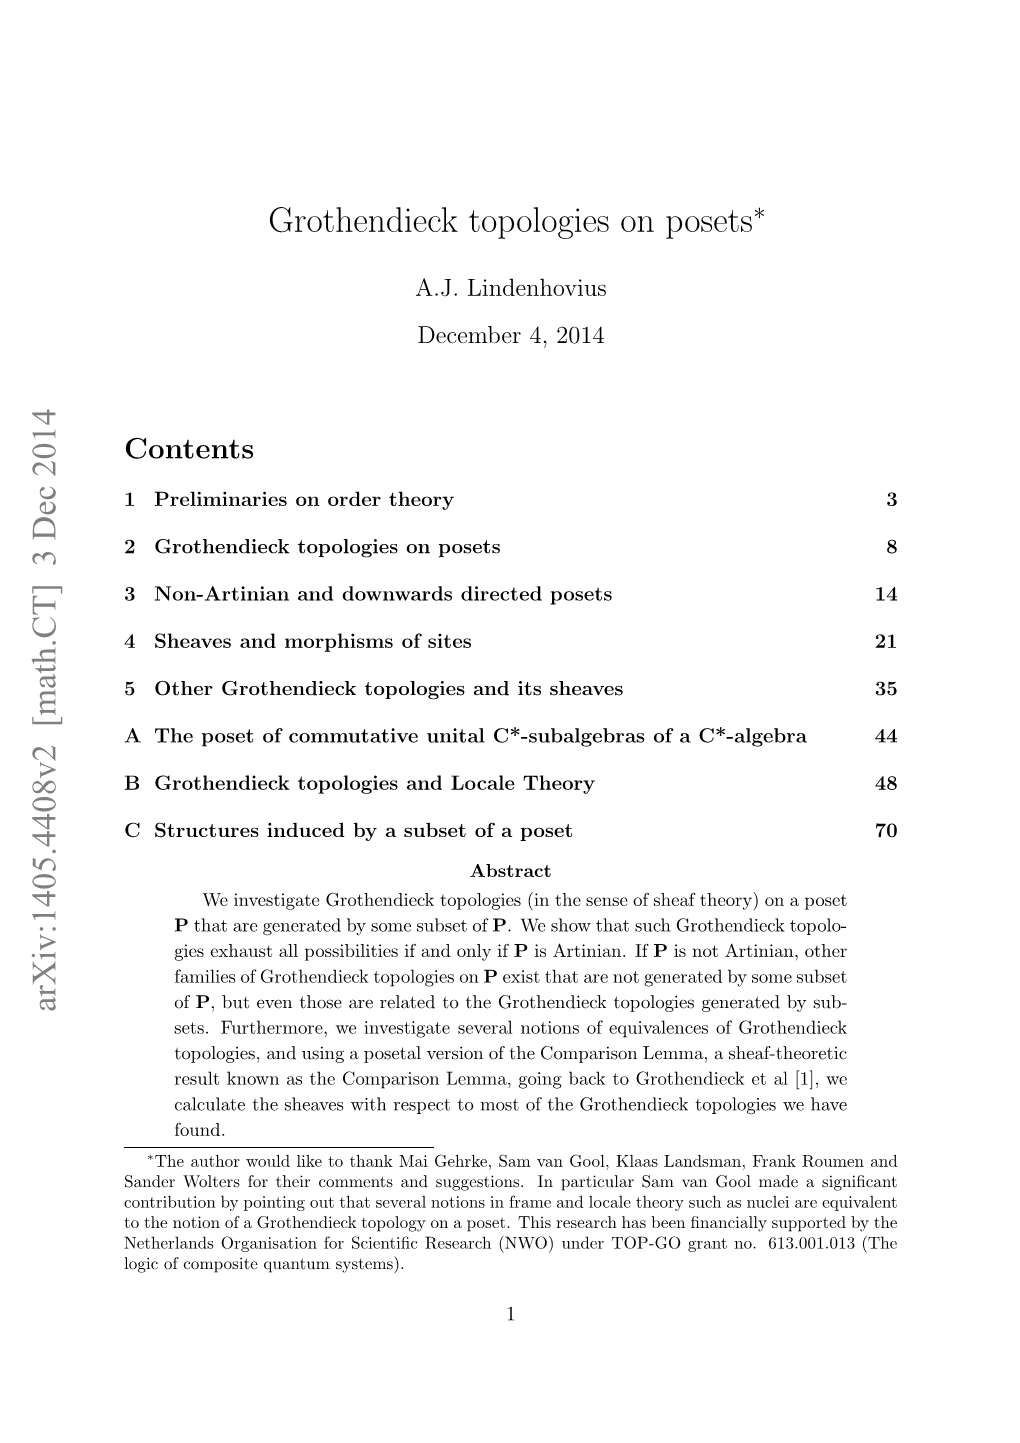 Grothendieck Topologies on a Poset